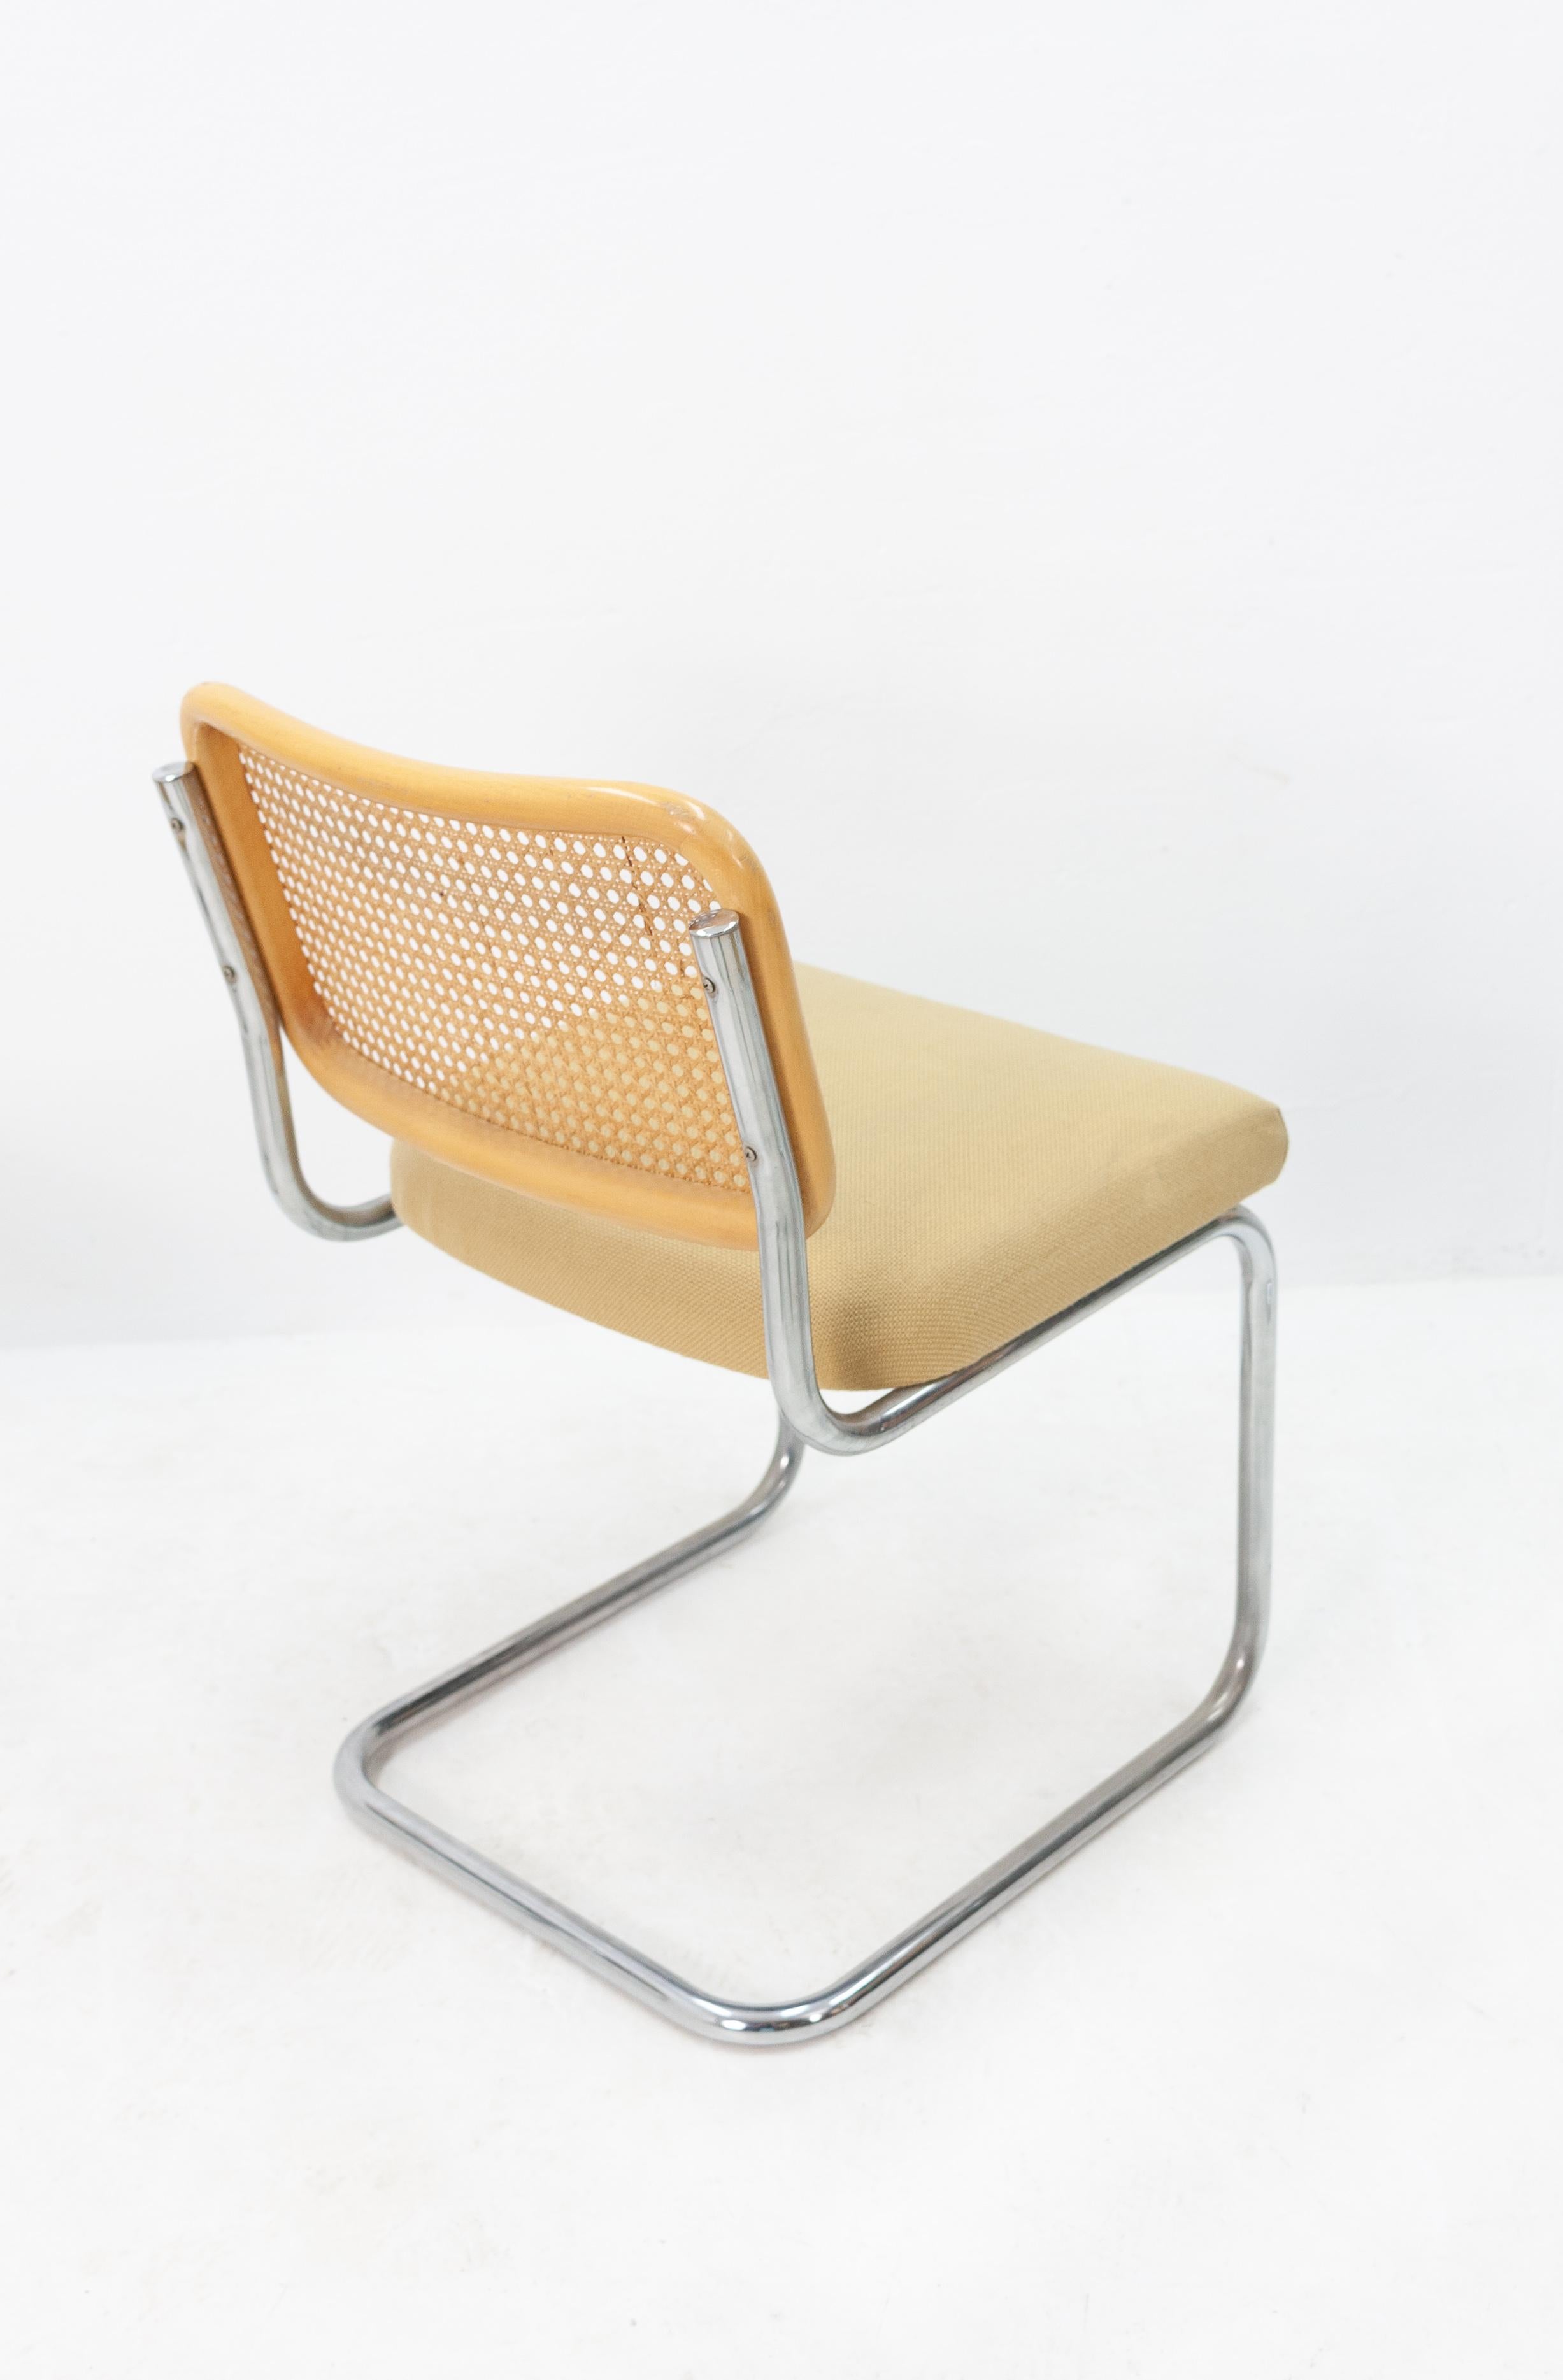 Chrome 4 Marcel Breuer Cesca B32 Cantilever Chairs